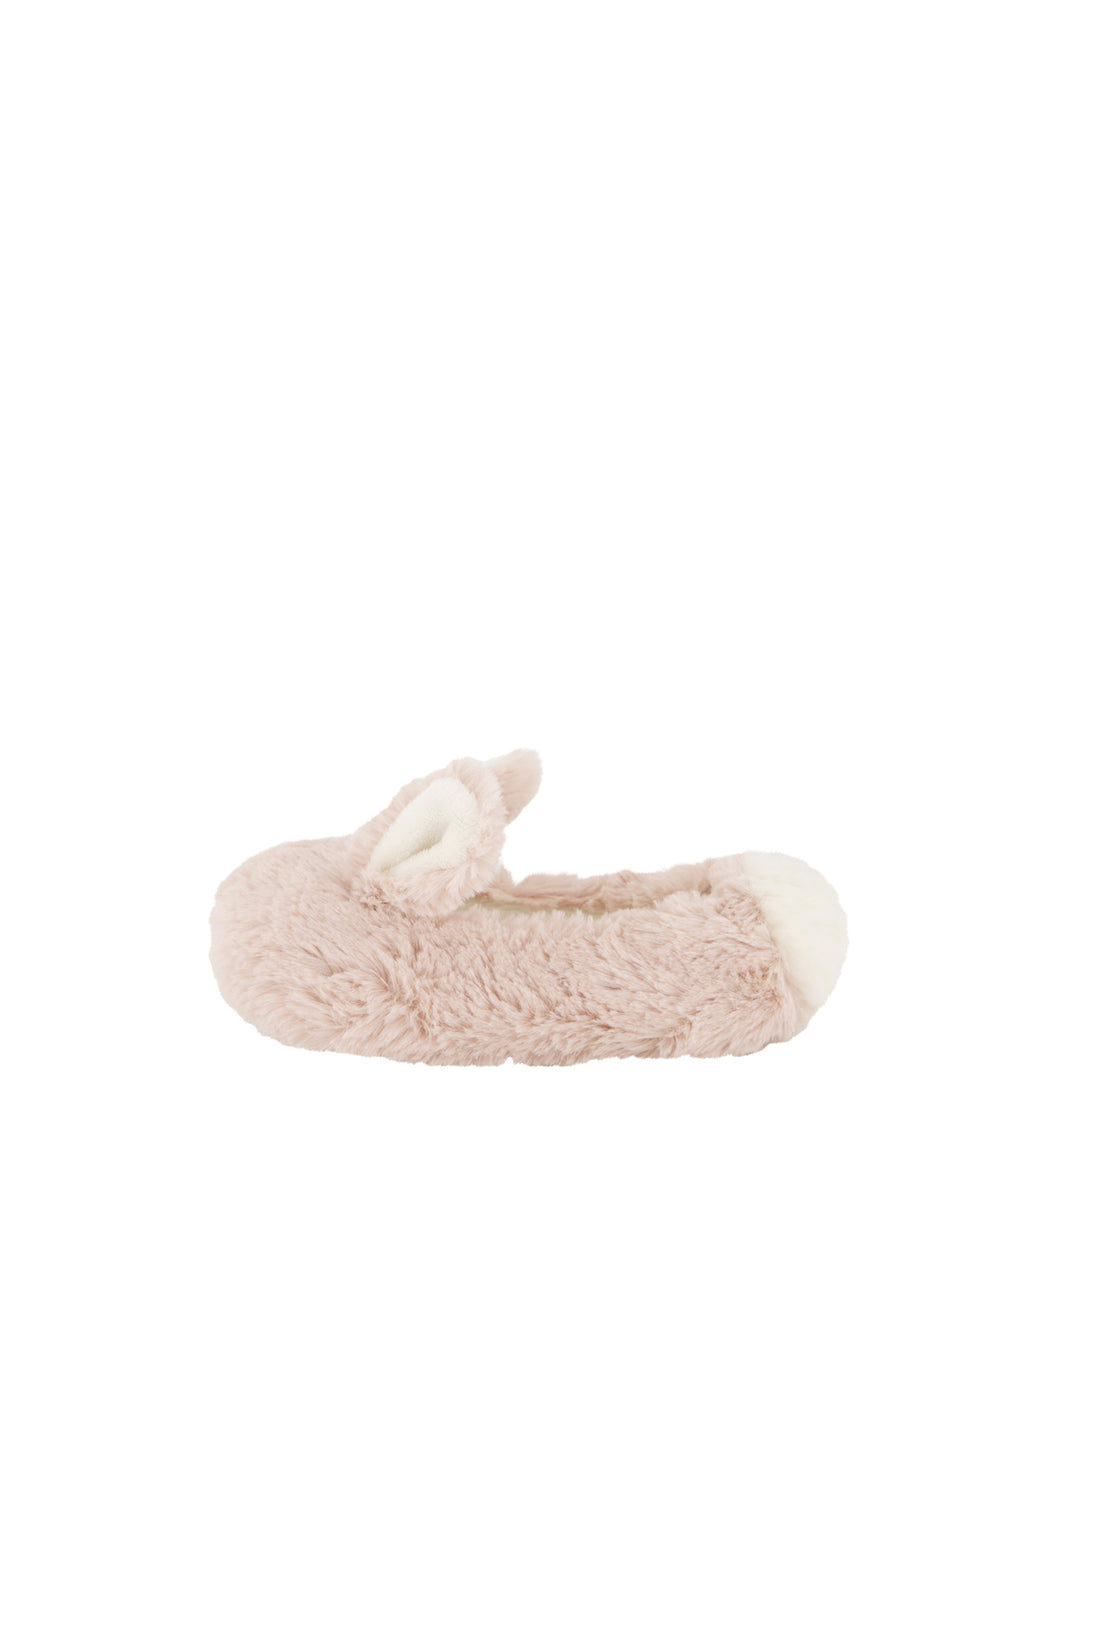 Bunny Slipper - Rose Childrens Footwear from Jamie Kay NZ